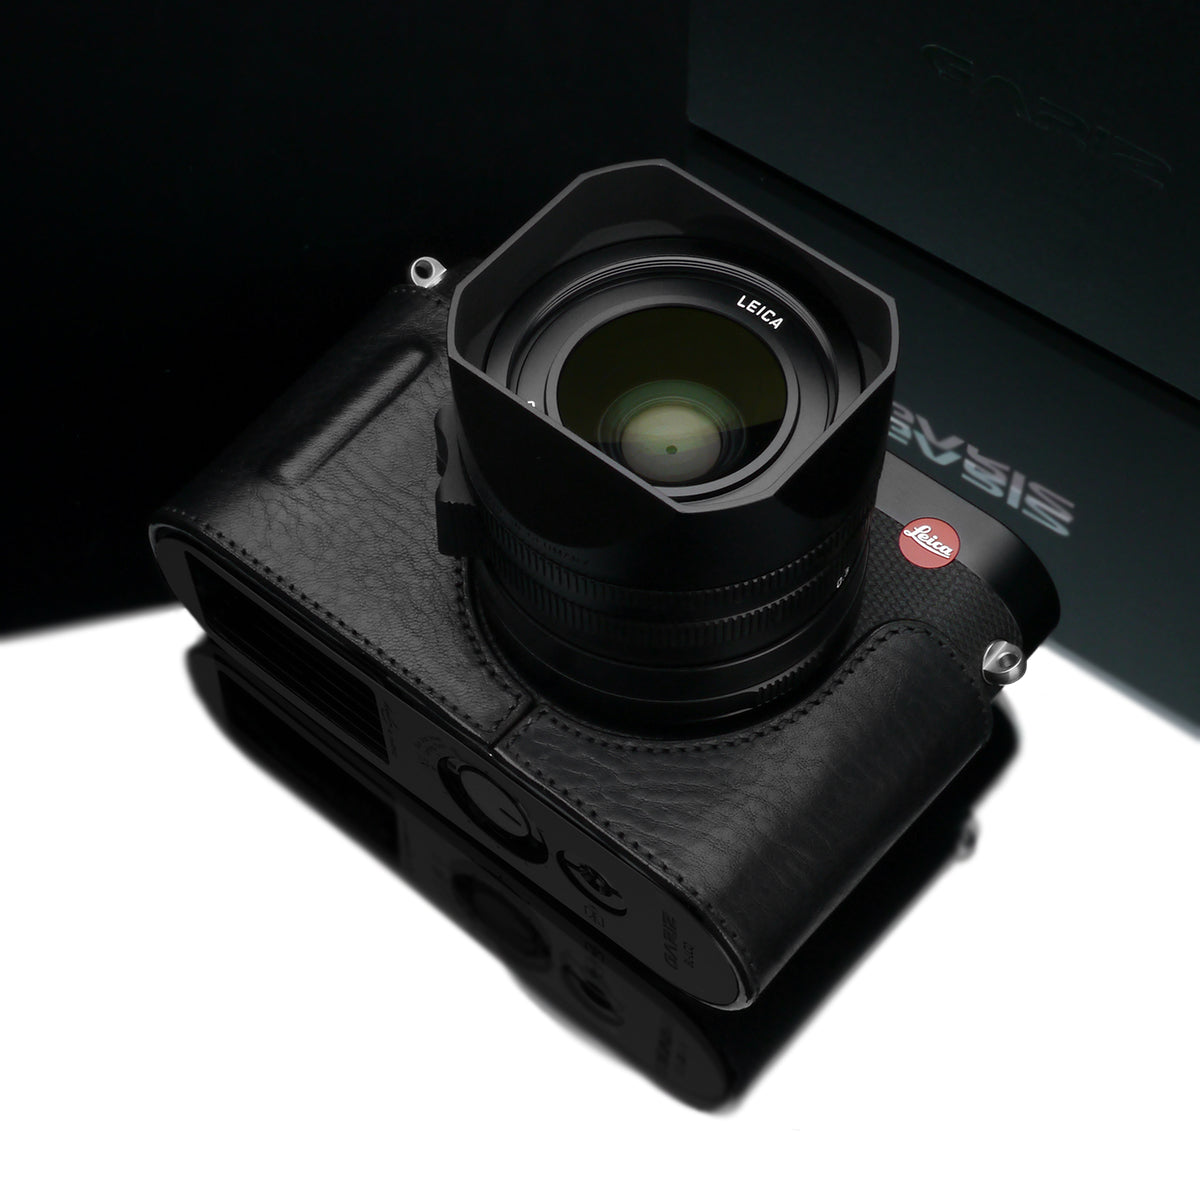 Gariz Black Leather Camera Half Case BL-LCQBK for Leica Q & Q-P